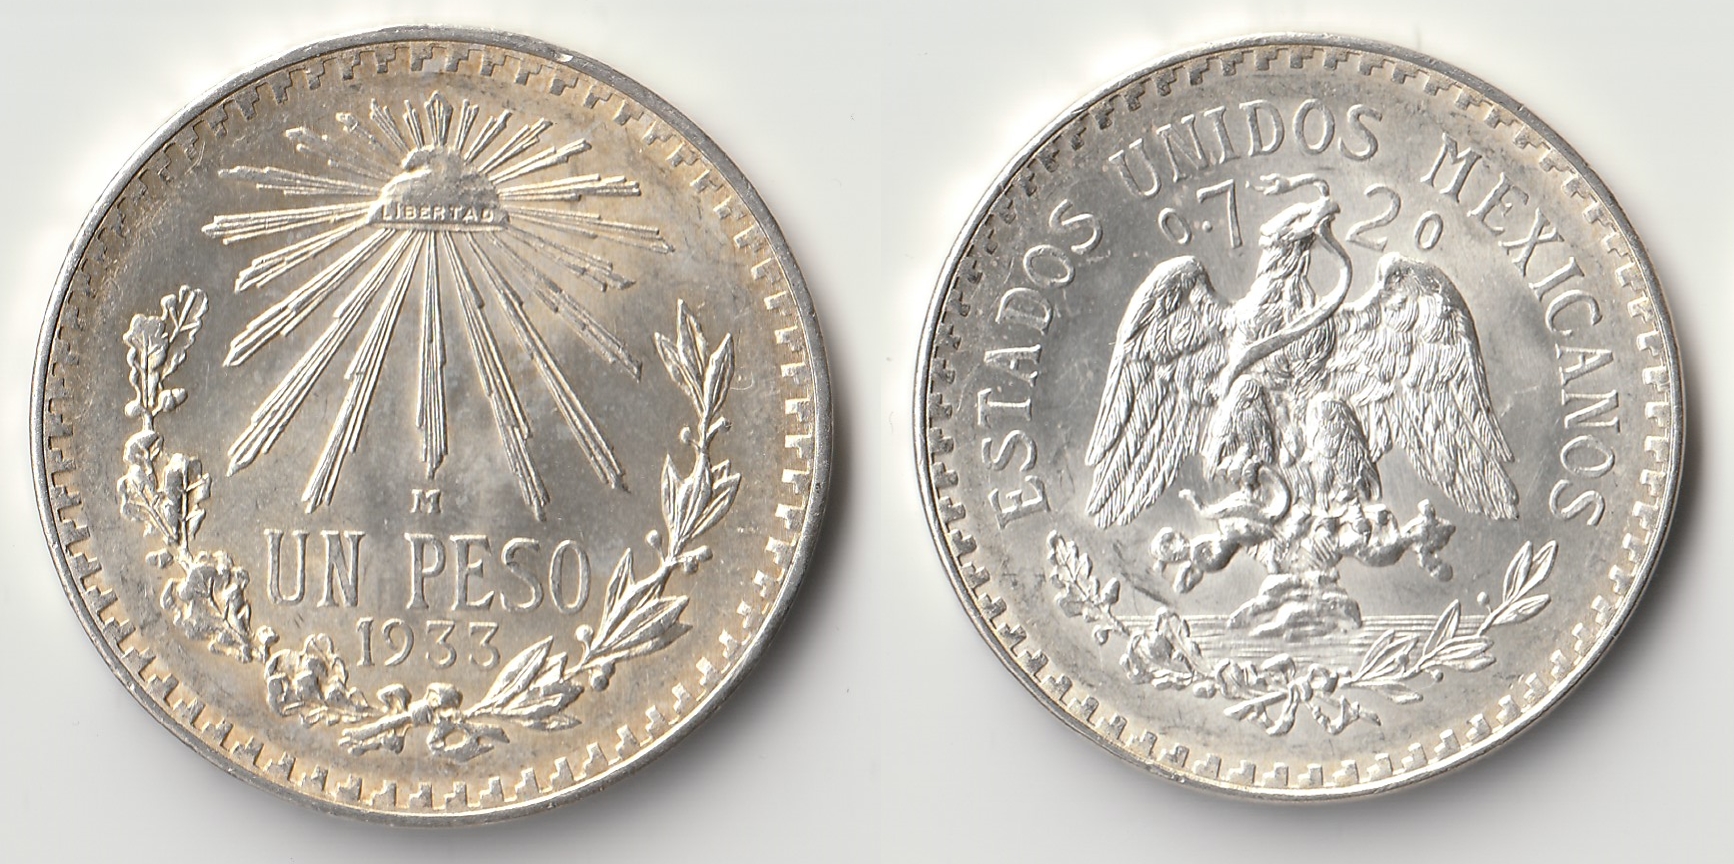 1933 mexico 1 peso.jpg